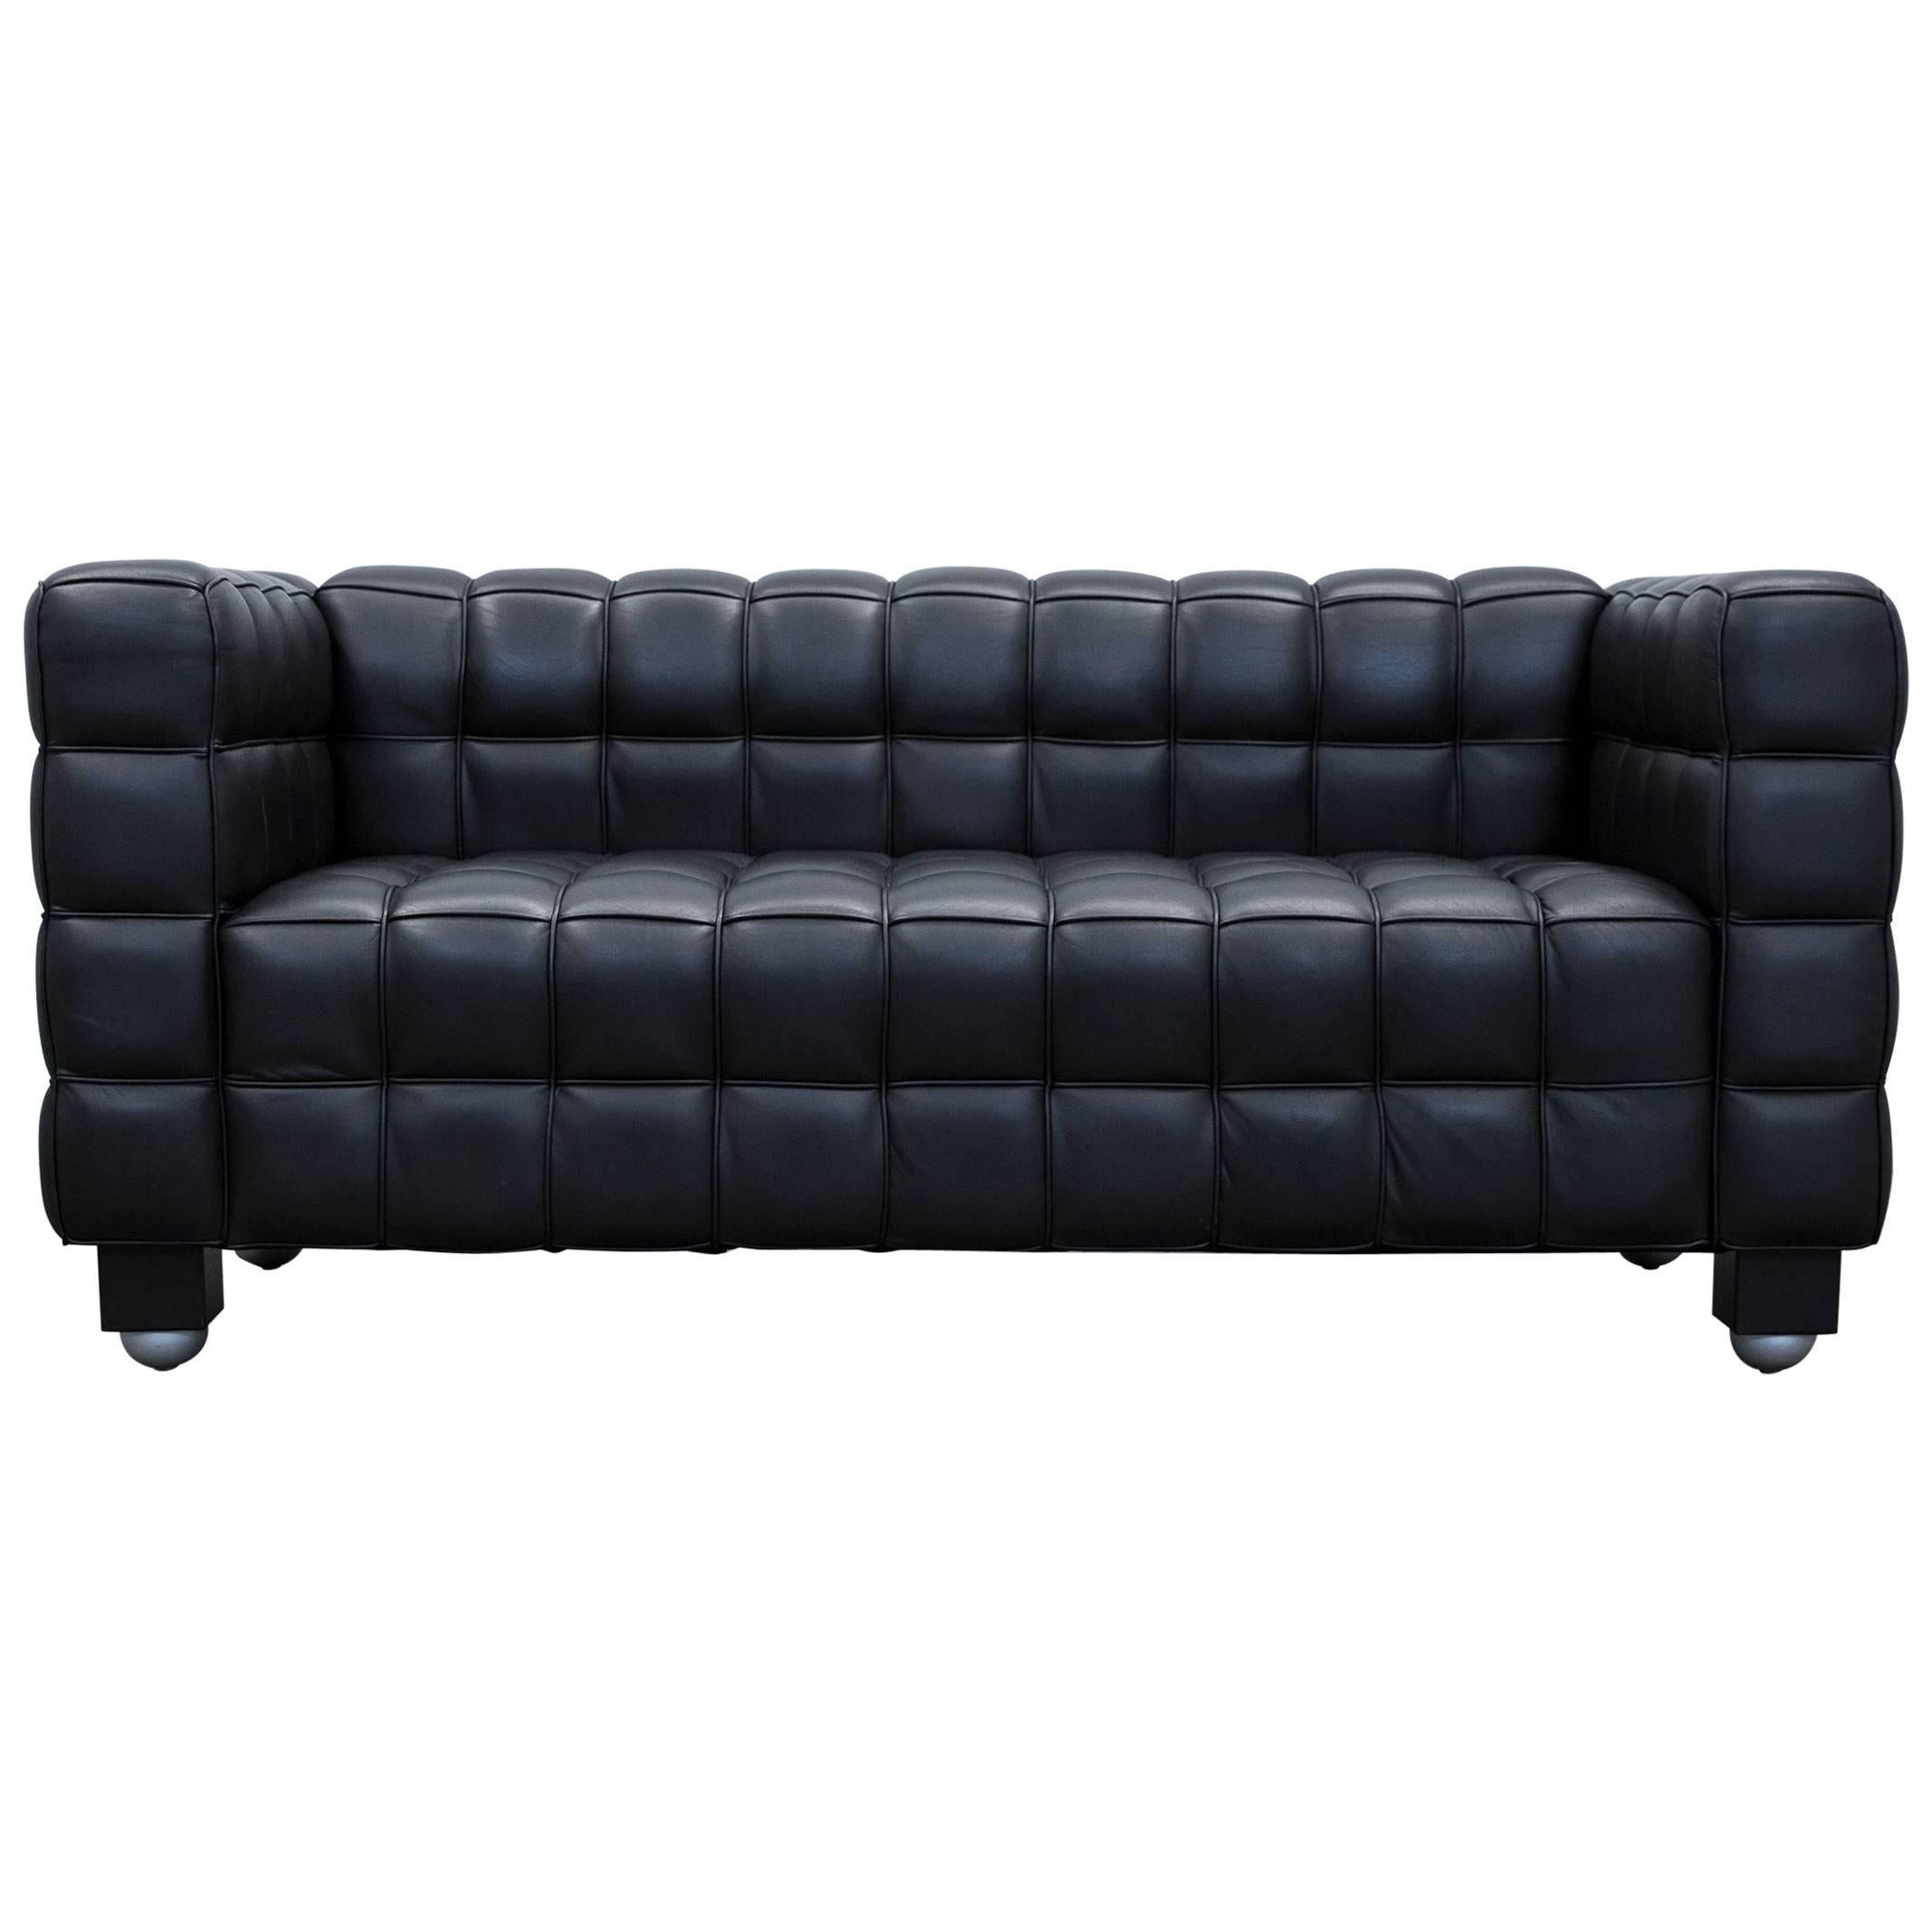 Wittmann Kubus Designer Sofa Leather Black Two-Seat Couch Modern